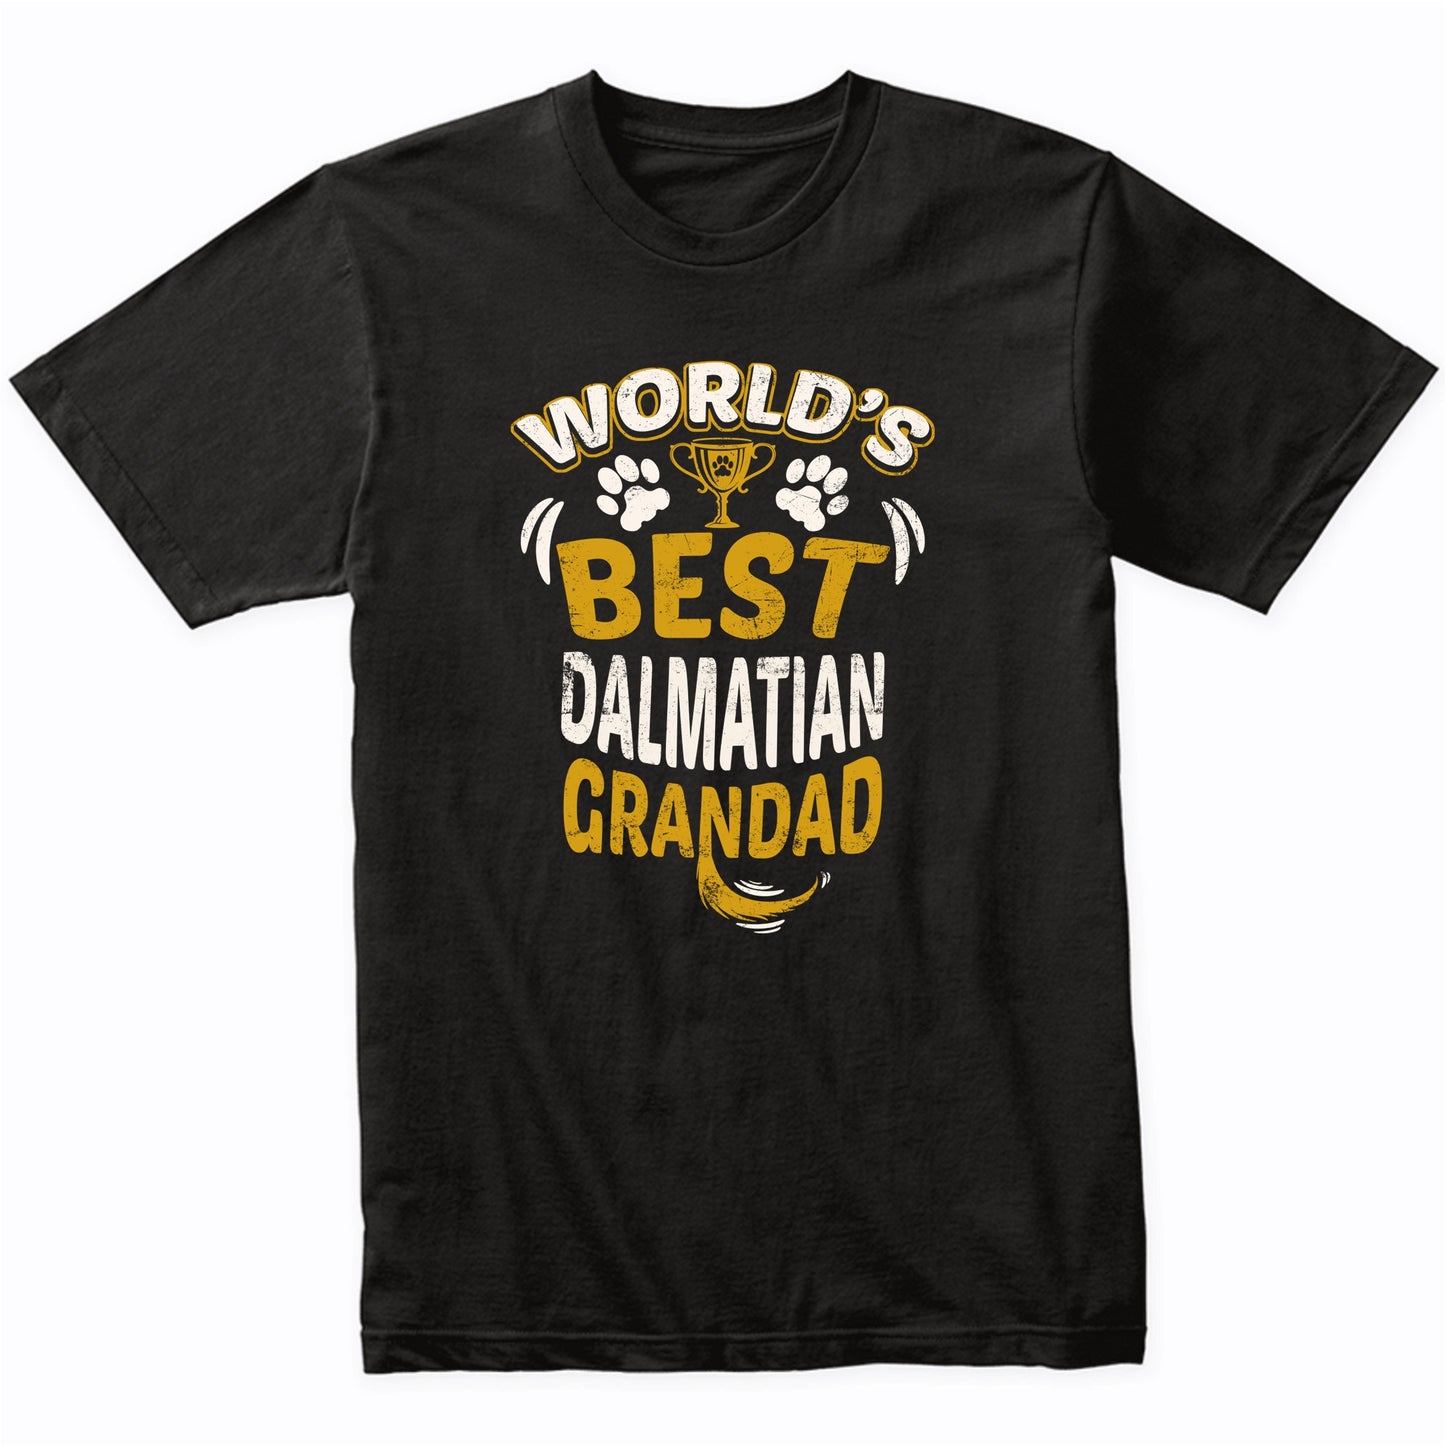 World's Best Dalmatian Grandad Graphic T-Shirt